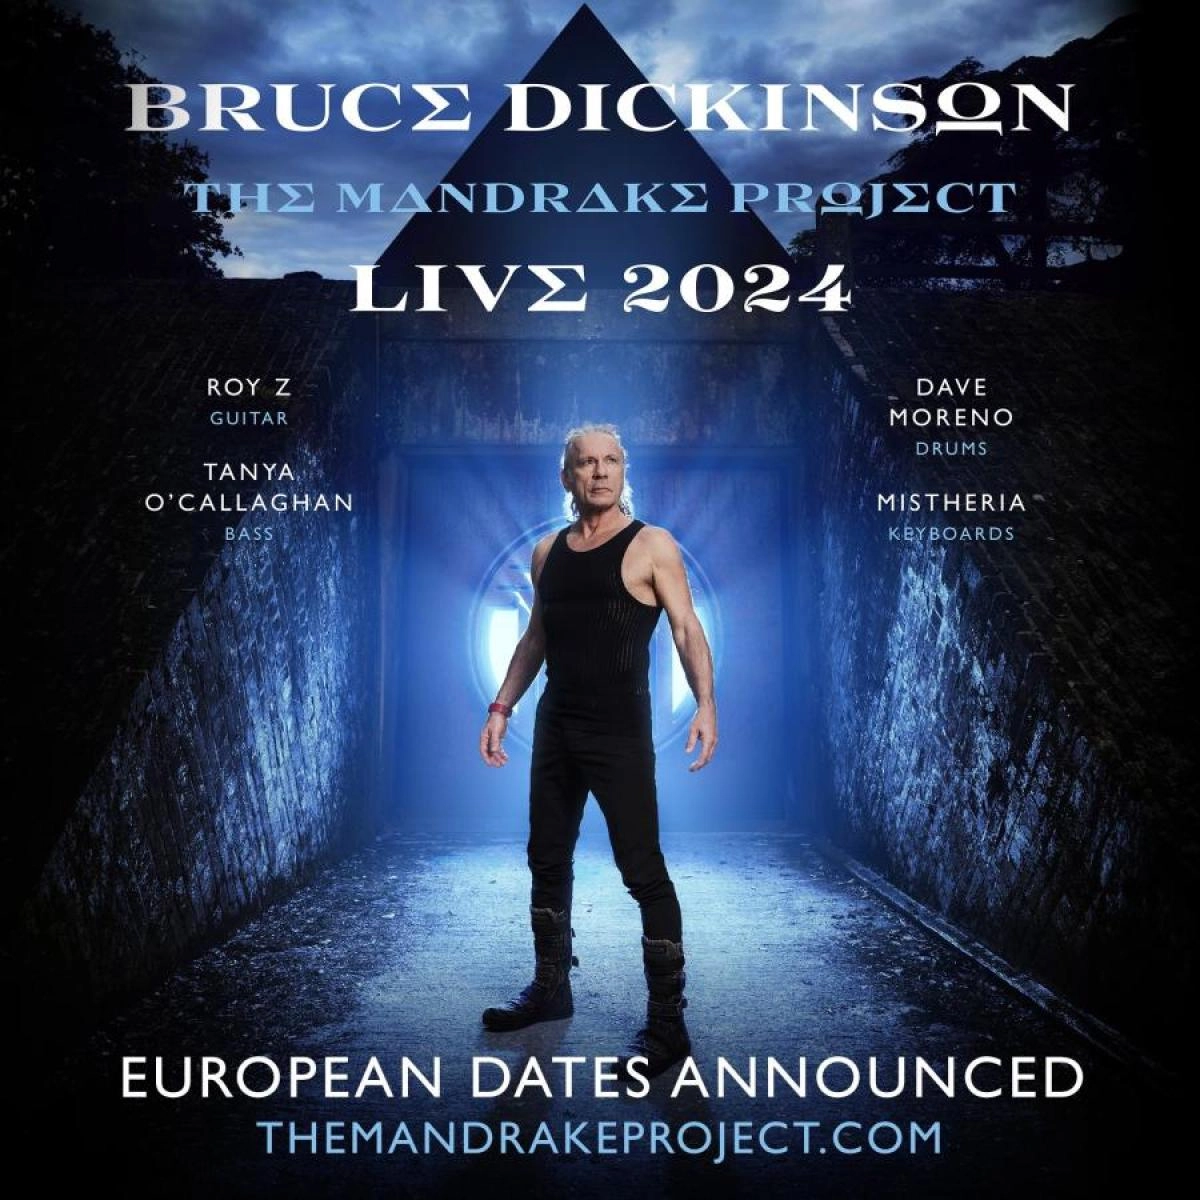 Bruce Dickinson - The Mandrake Project Live 2024 at Maimarkt Mannheim Tickets